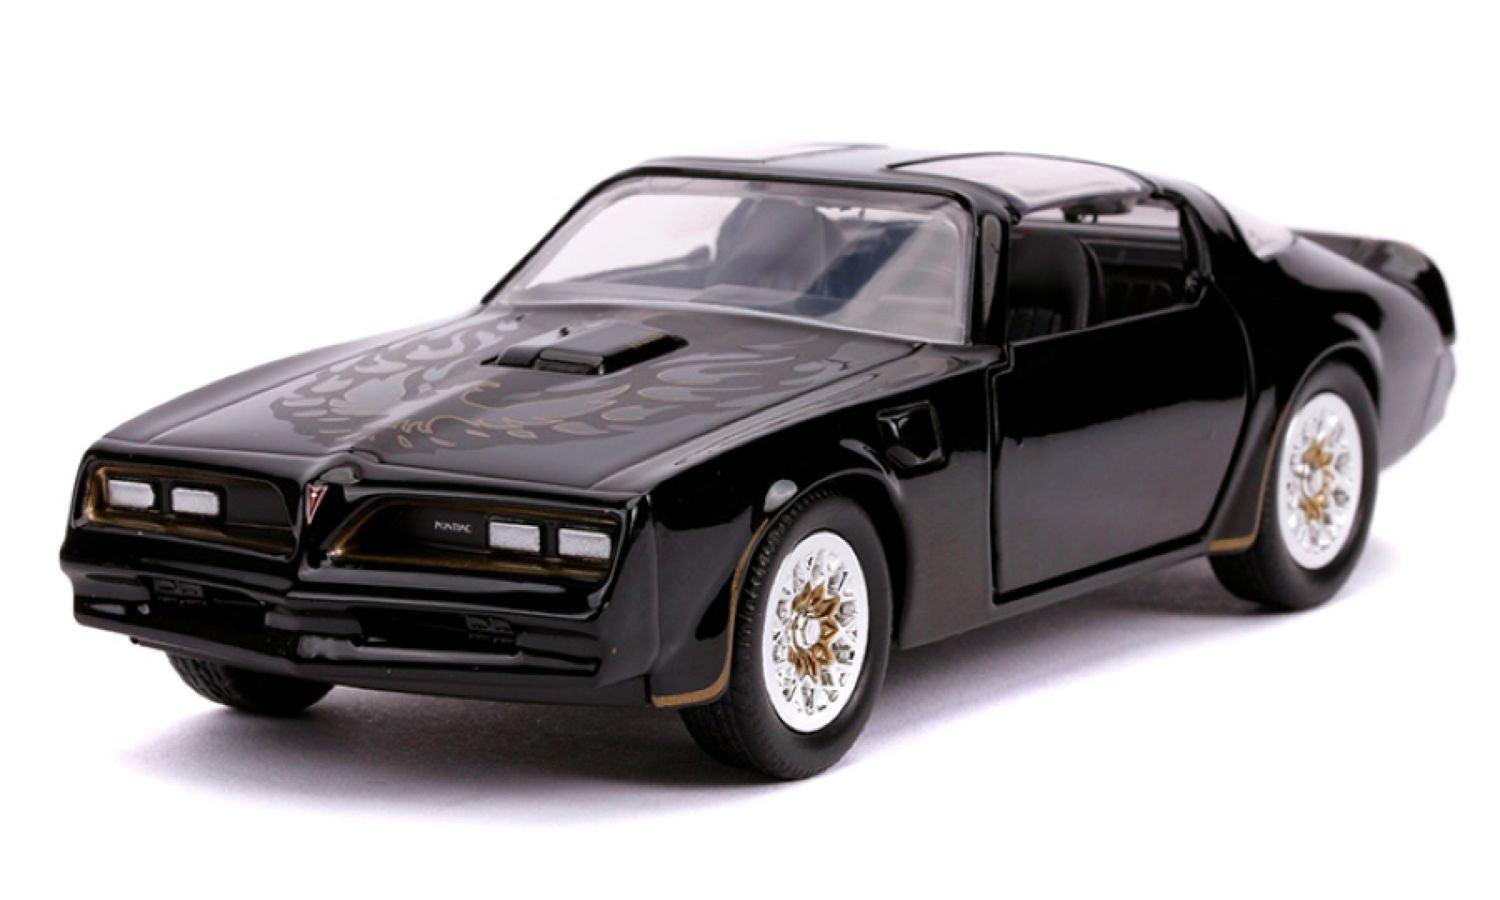 JAD30763 Fast and Furious - 1977 Pontiac Firebird 1:32 Scale Hollywood Ride - Jada Toys - Titan Pop Culture